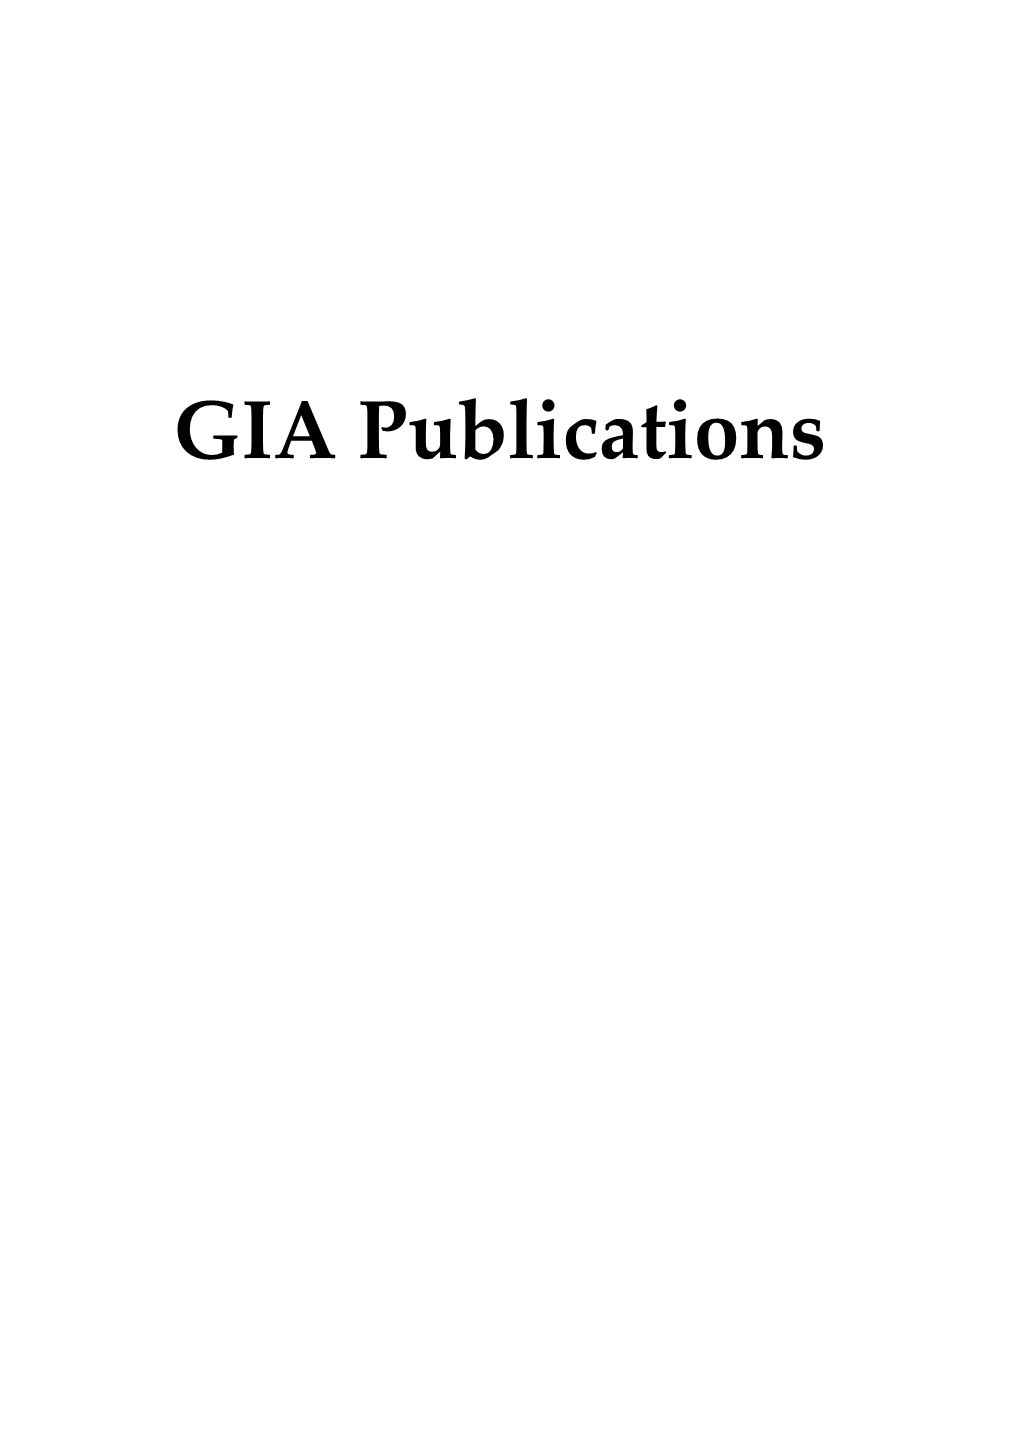 GIA Publications